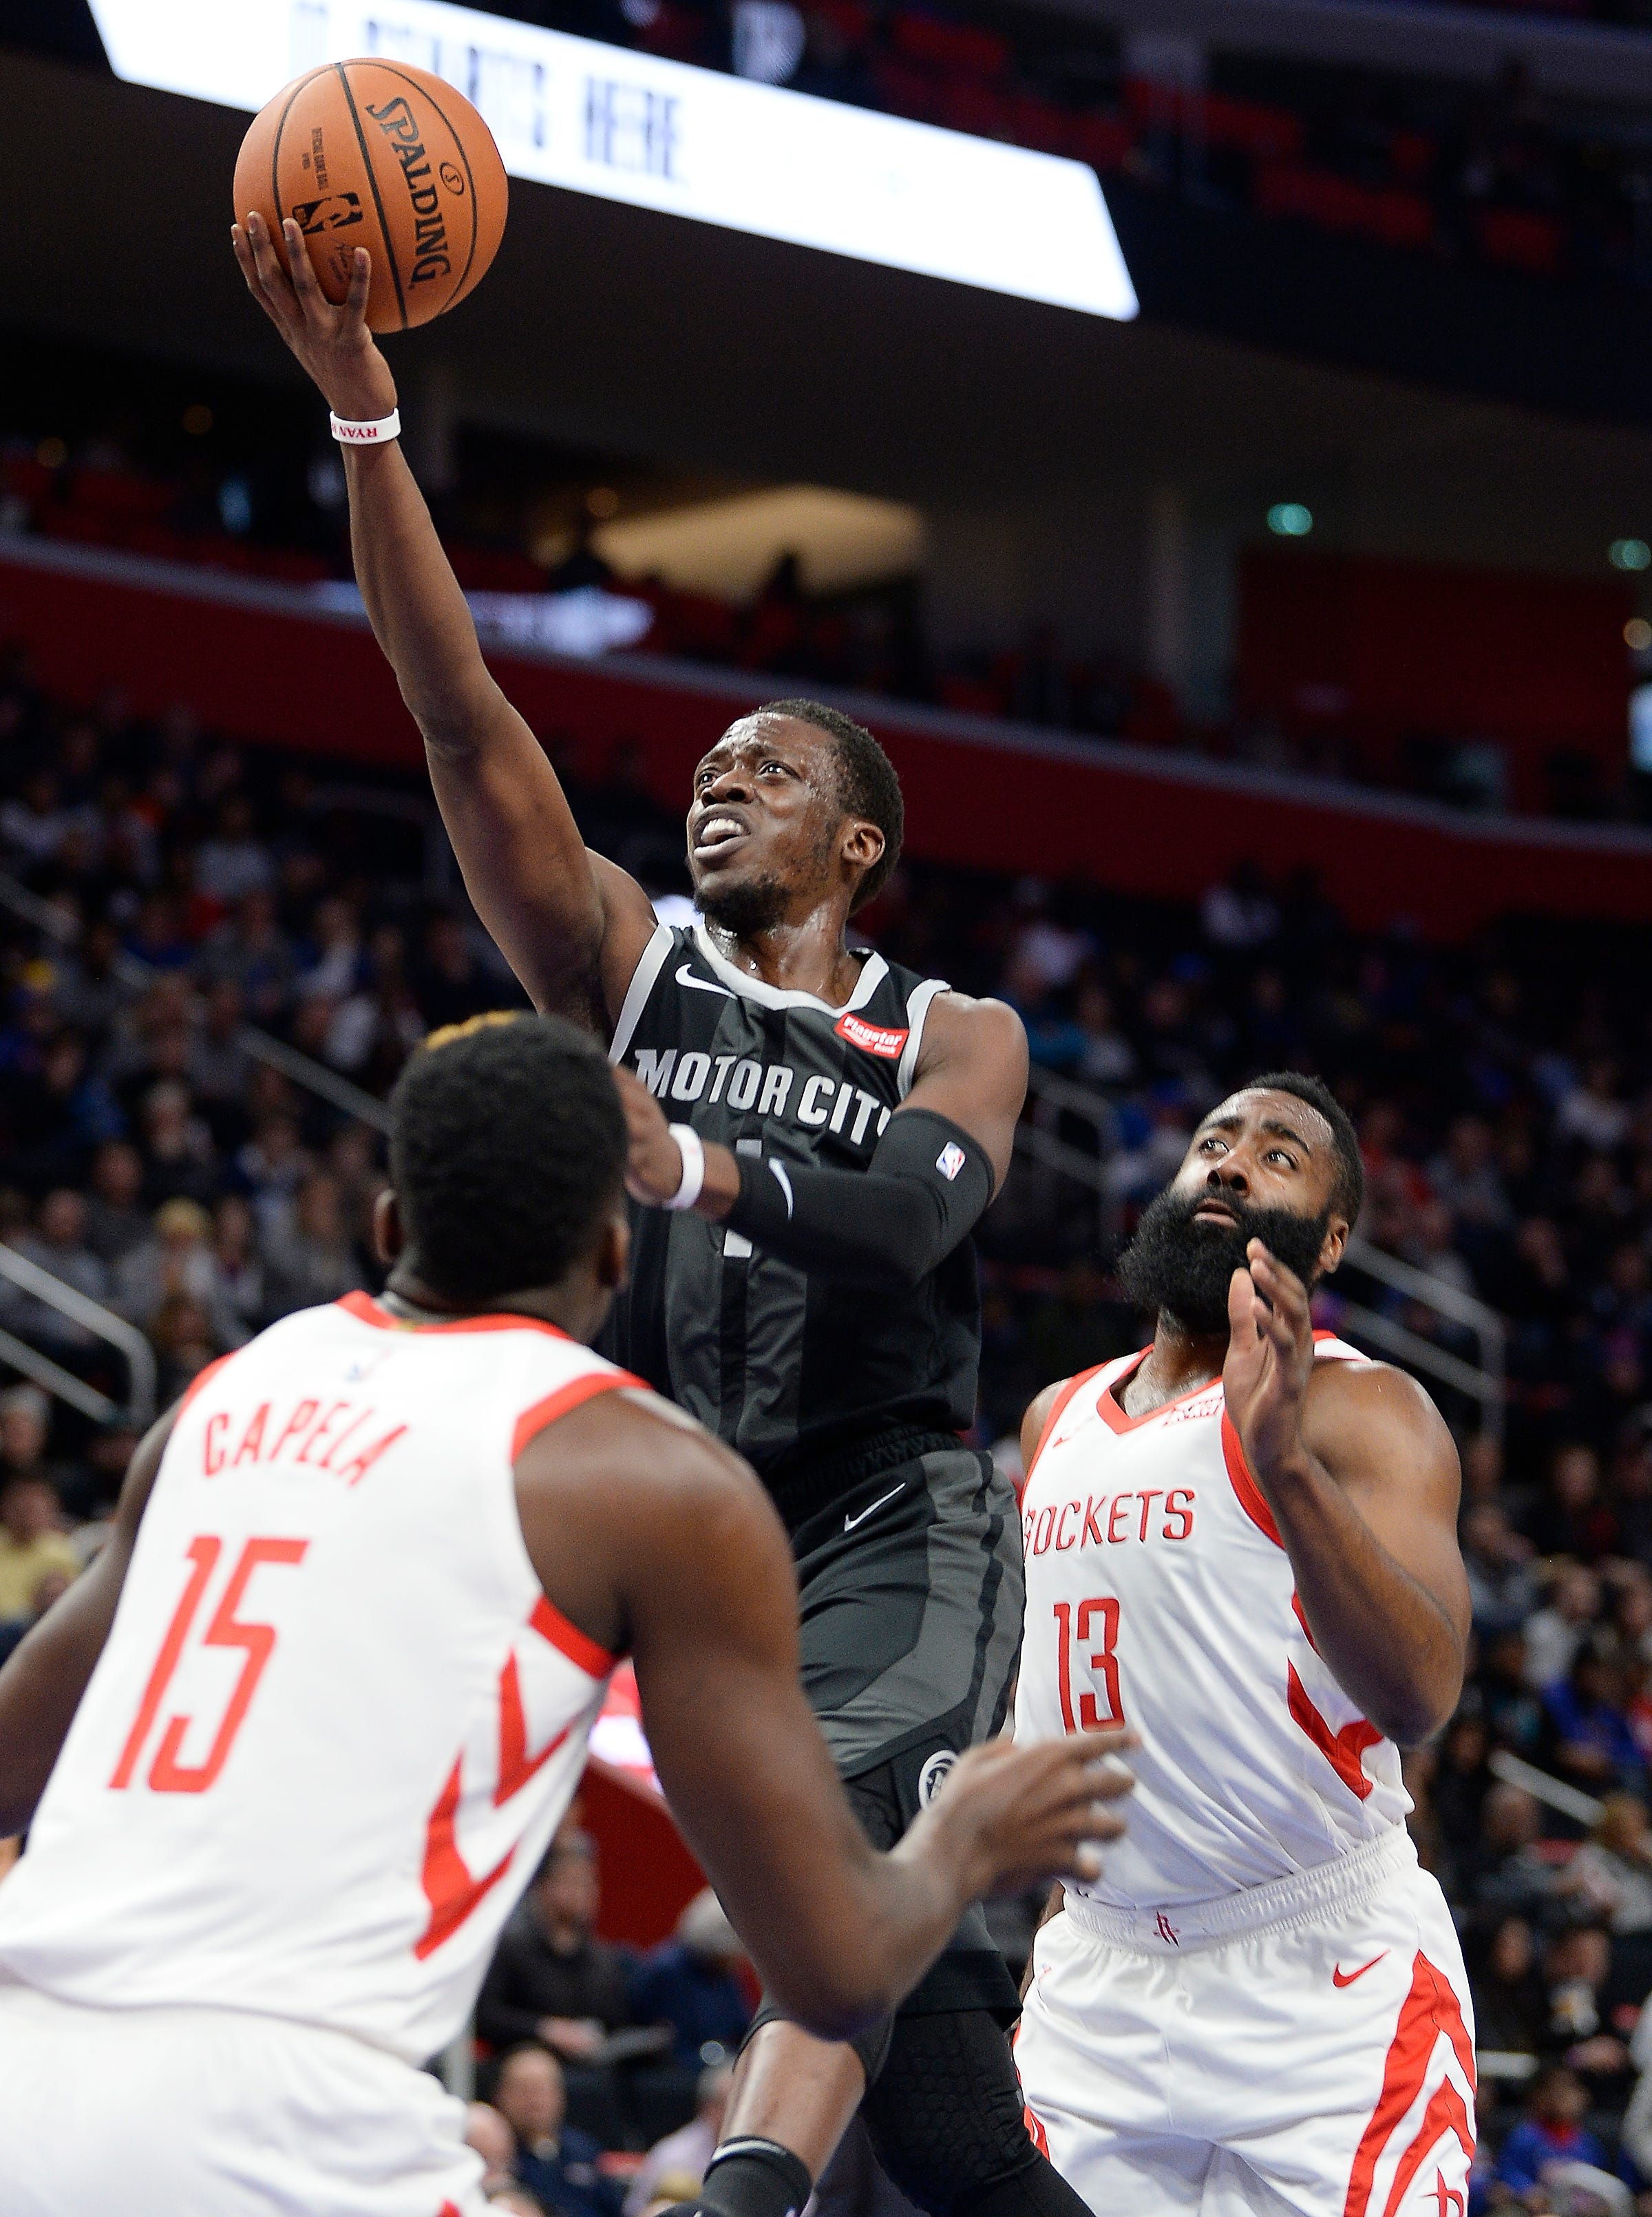 Pistons' Reggie Jackson scores over Rockets' James Harden in the first quarter. Pistons vs Houston Rockets, Little Caesars Arena, November, 23, 2018, Detroit, Mi.